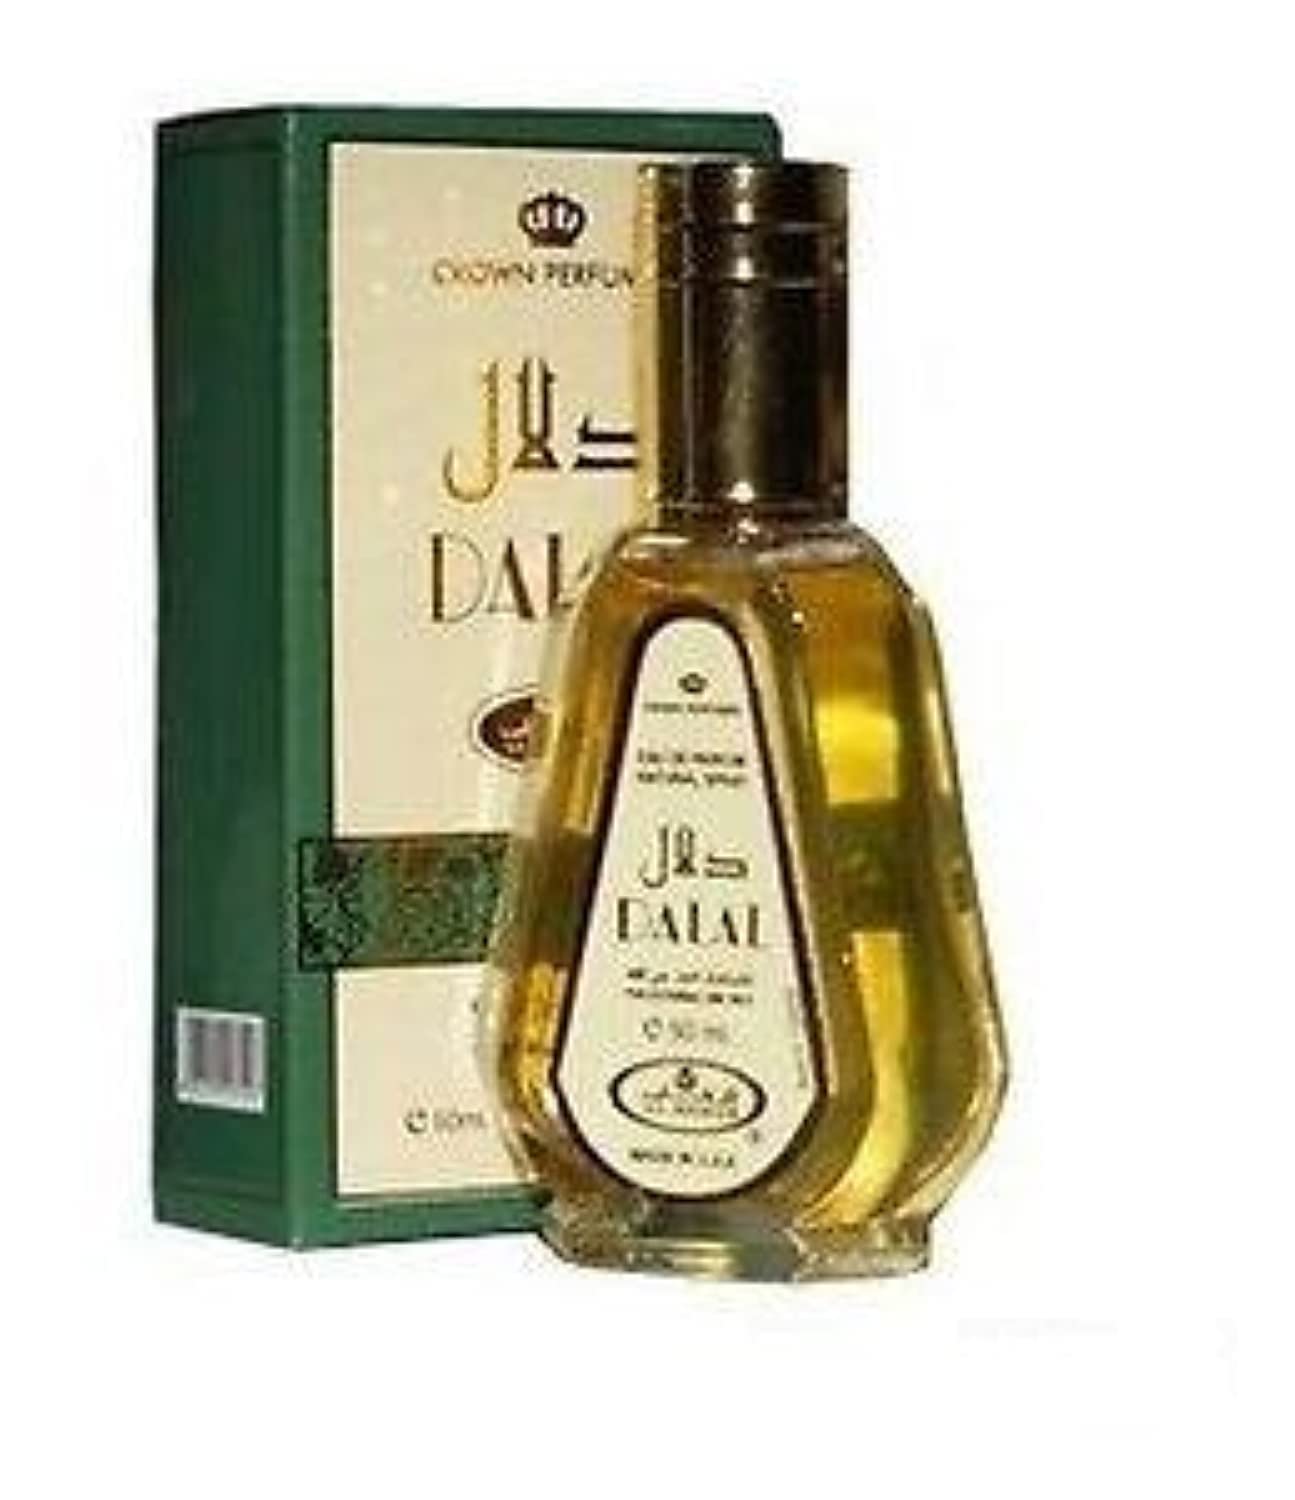 Dalal - Al-Rehab Eau De Perfume Spray